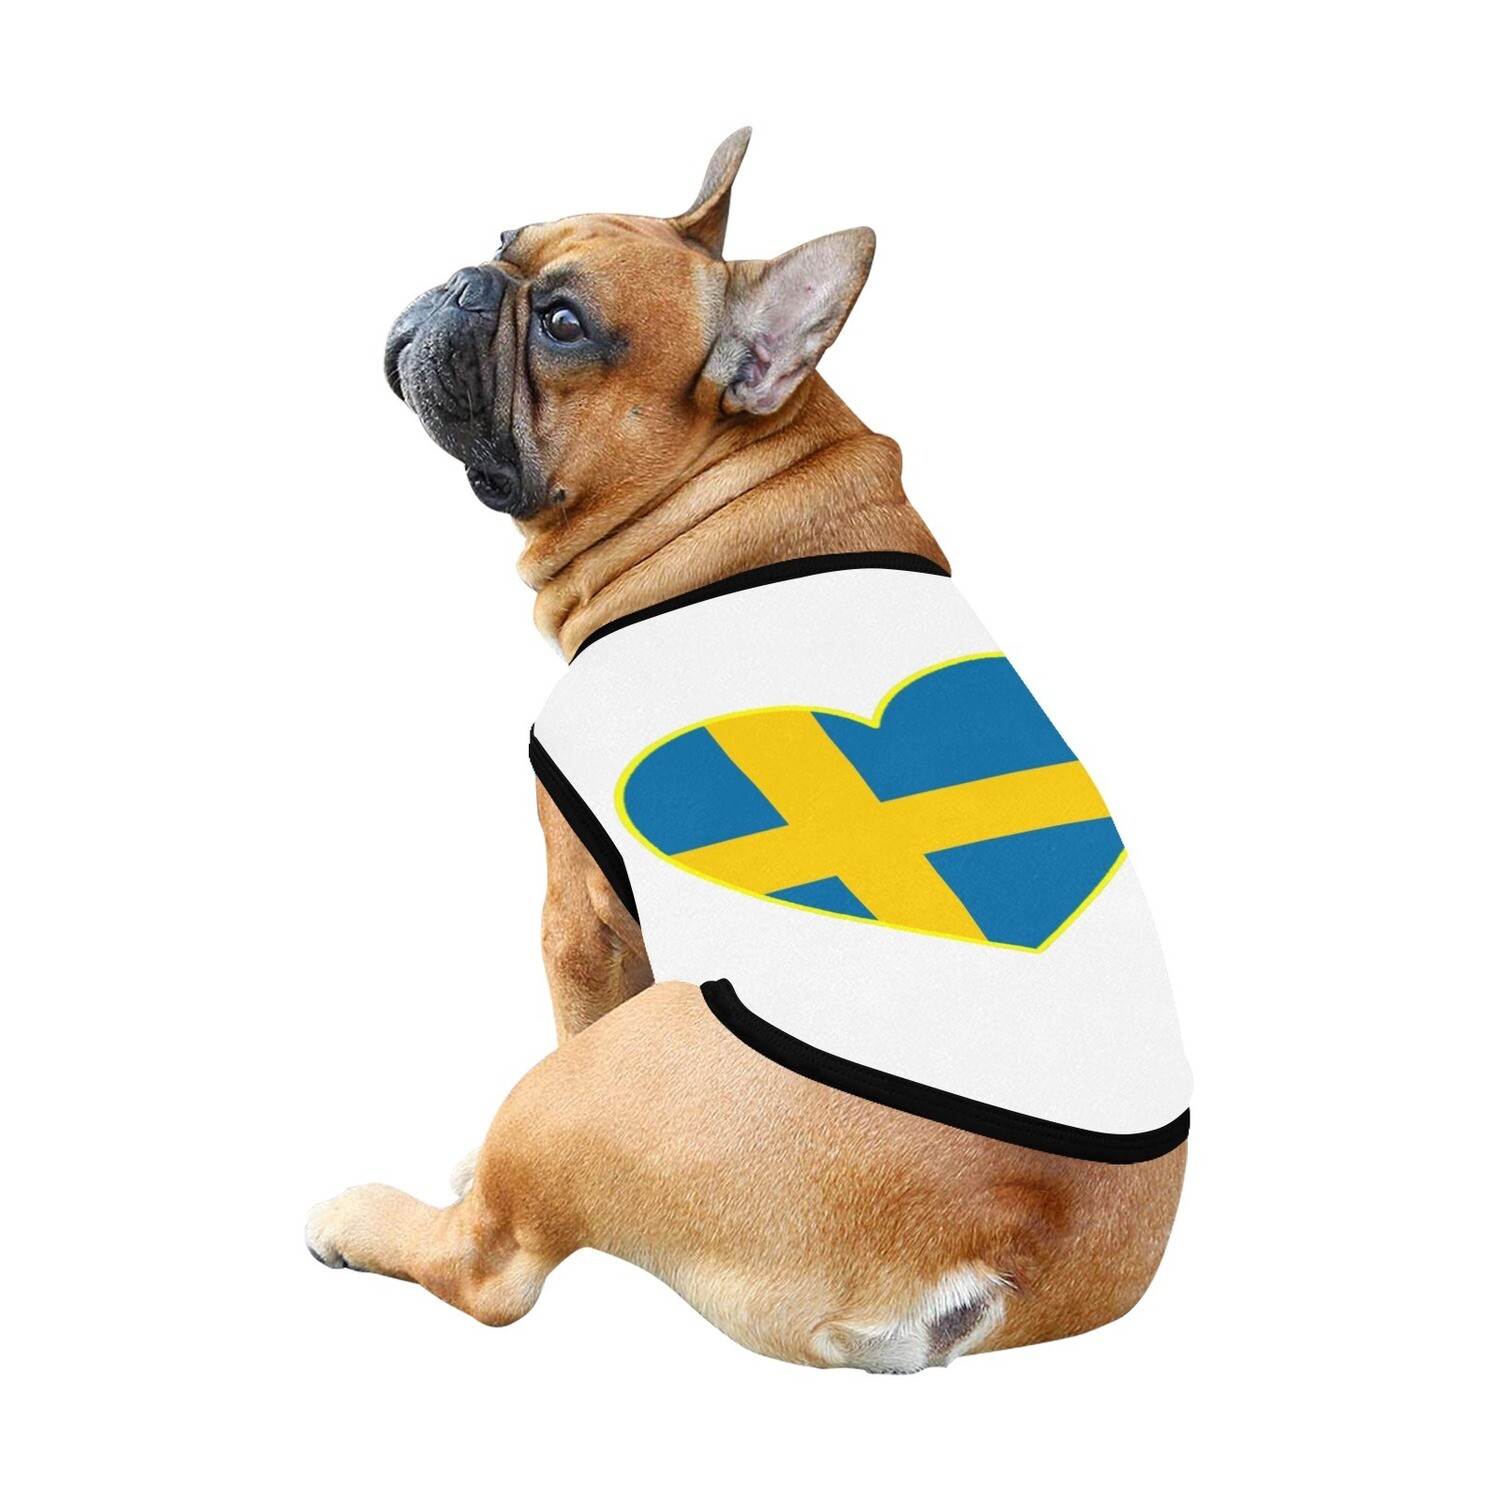 🐕🇸🇪I love Sweden, Swedish flag, dog t-shirt, dog gift, dog tank top, dog shirt, dog clothes, gift, 7 sizes XS to 3XL, heart shape, white